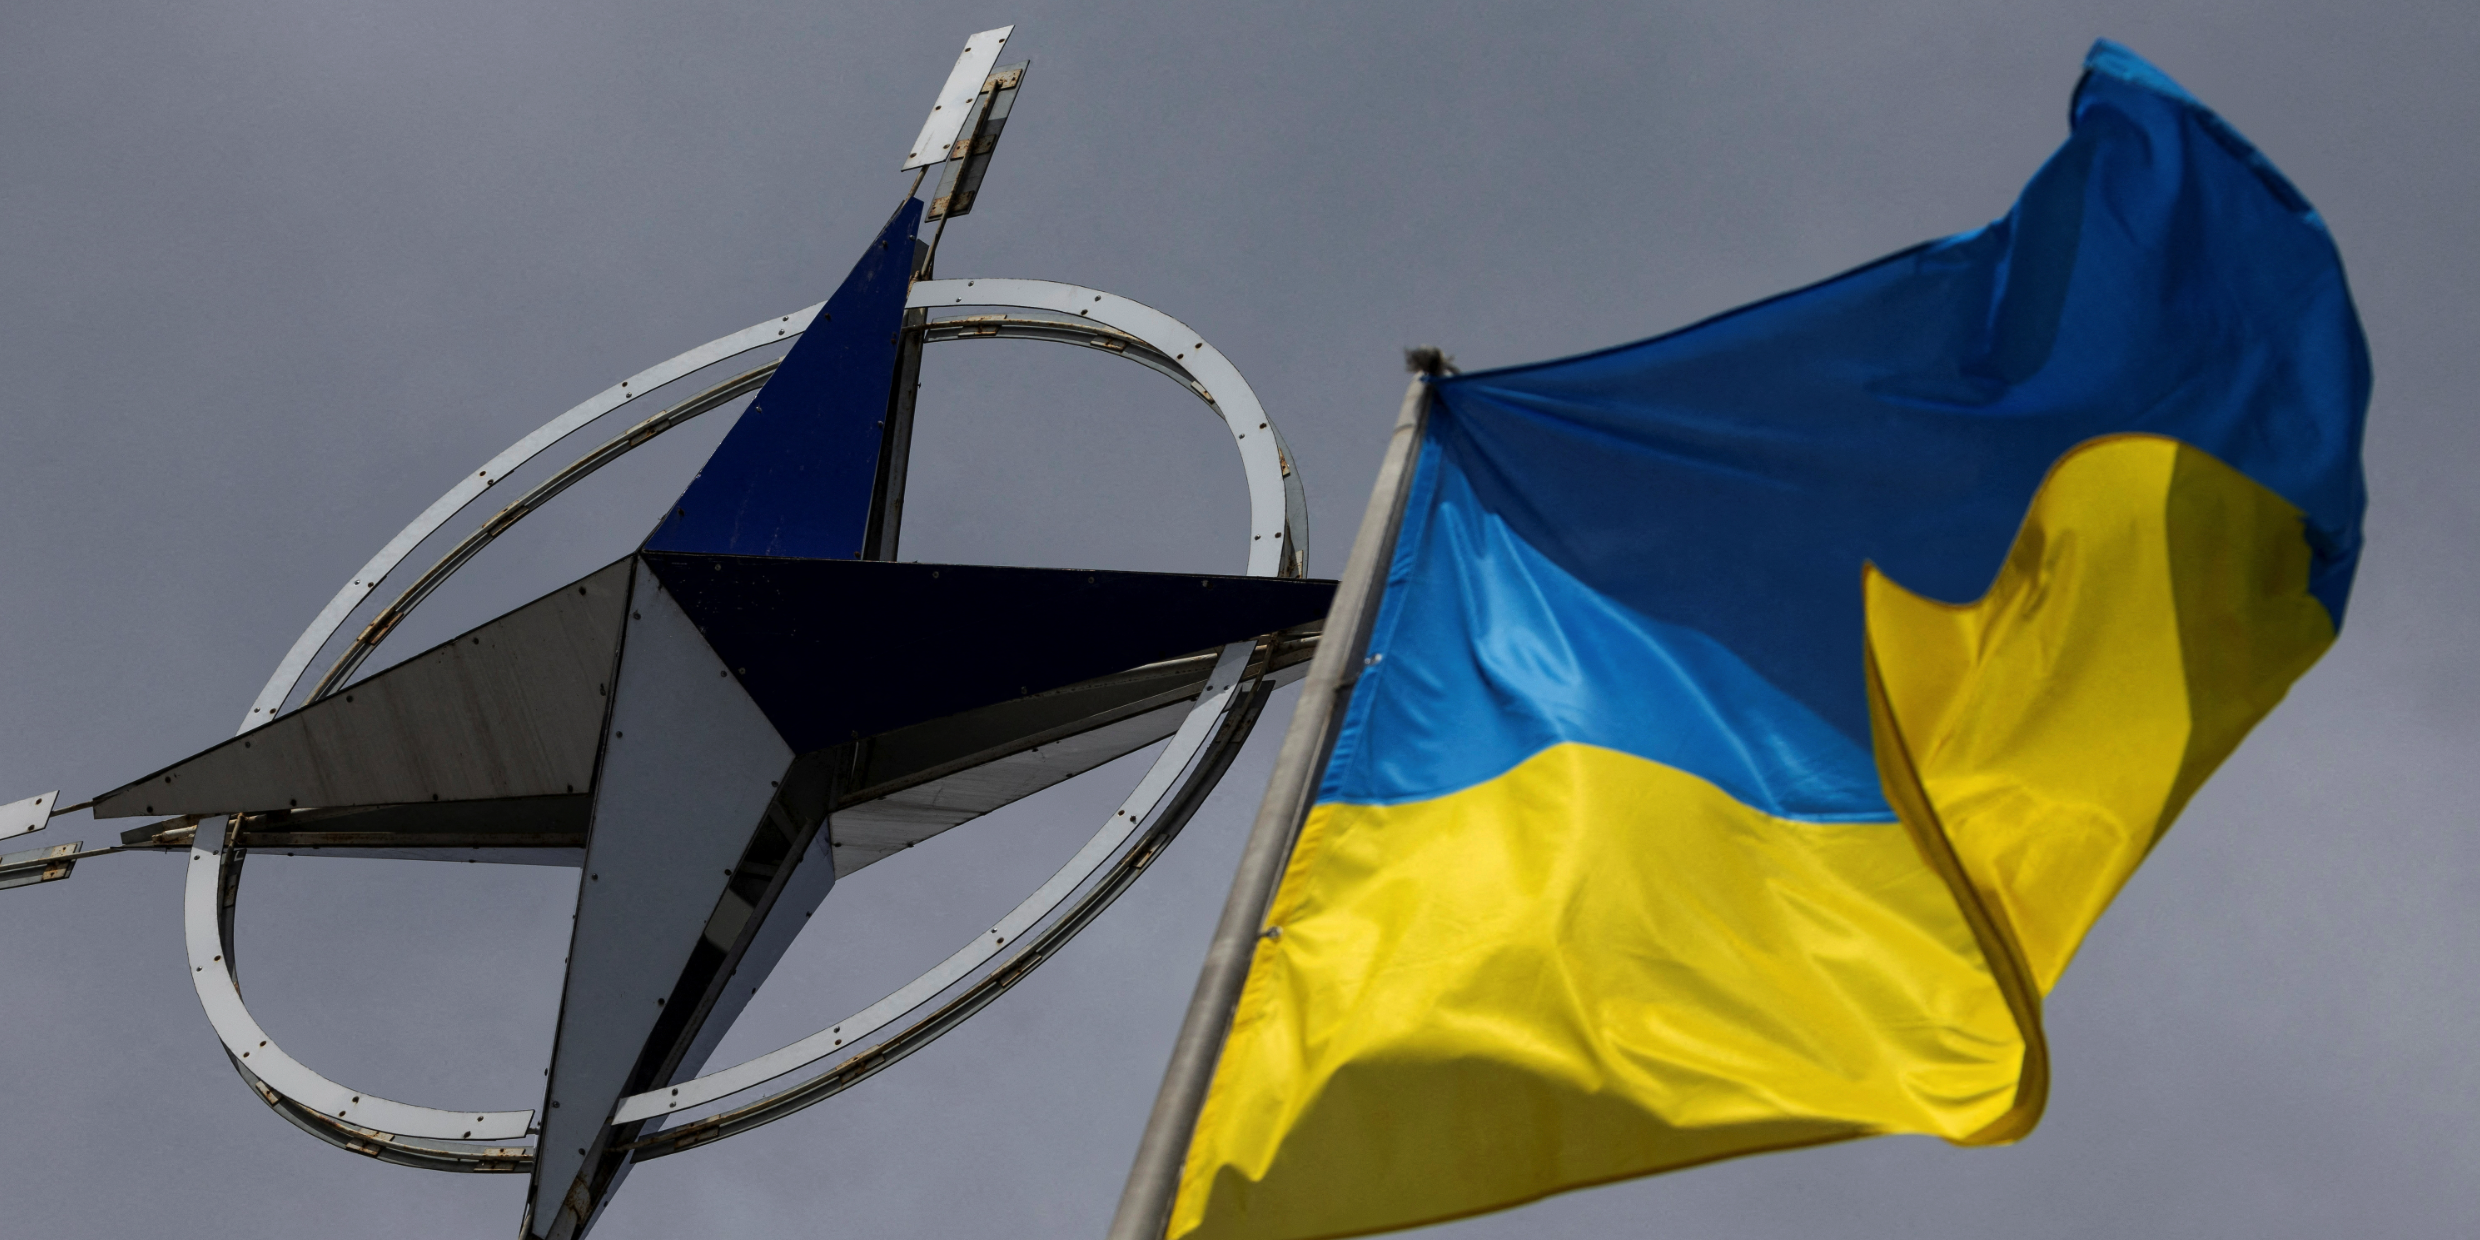 “Ukraine’s future is in NATO”: Washington, D.C. Summit decision details